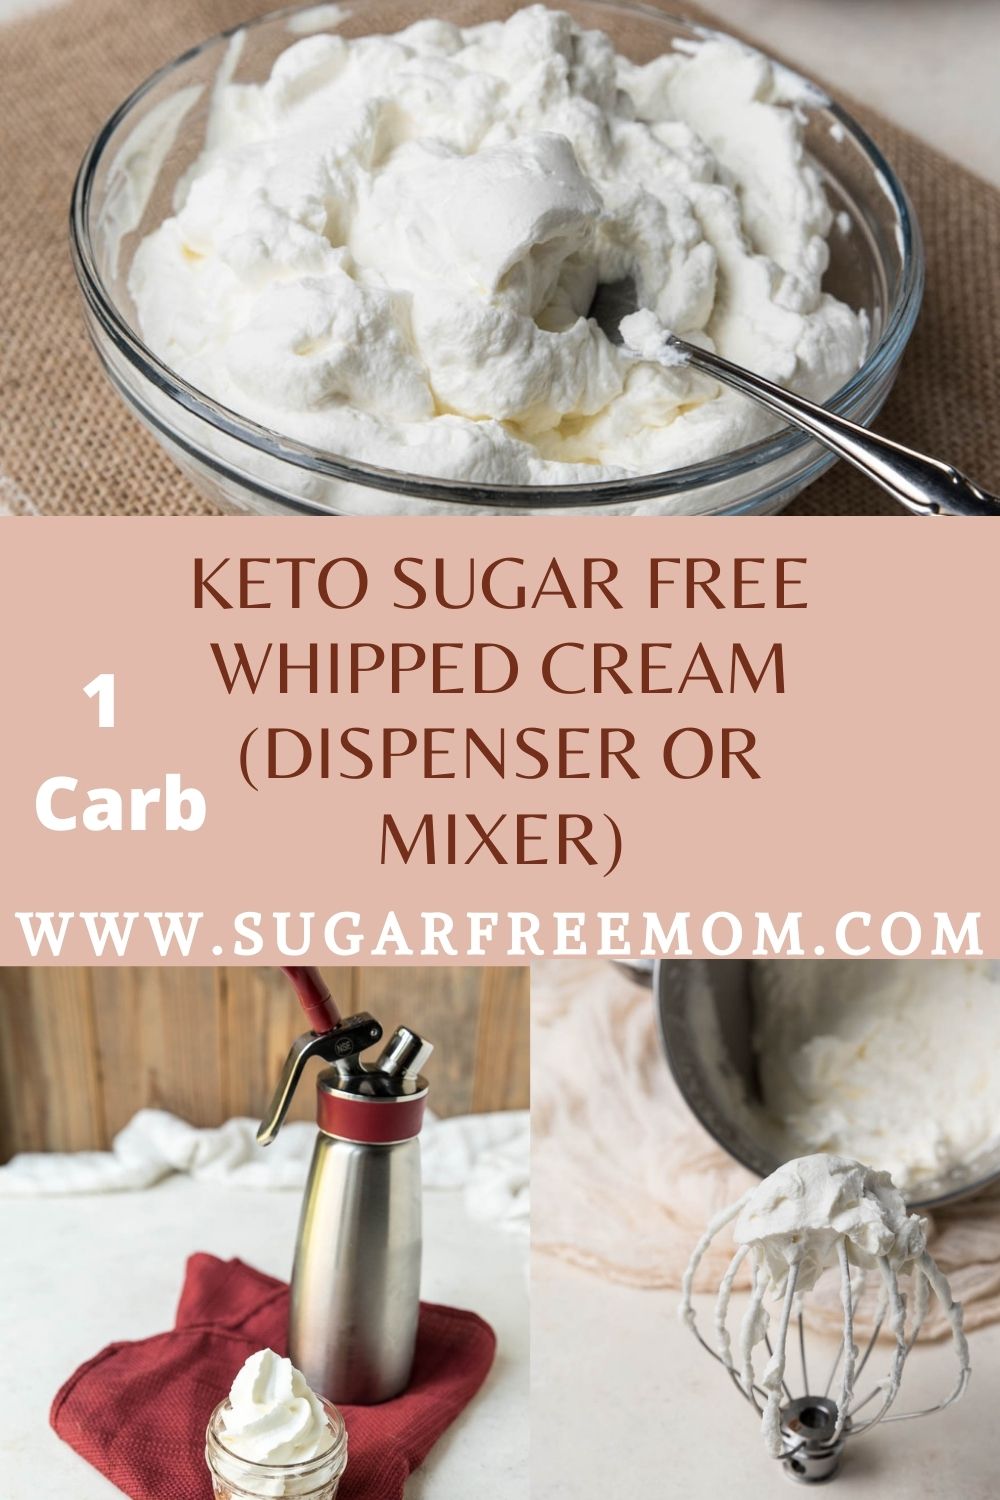 Keto Sugar Free Whipped Cream (Dispenser or Mixer)